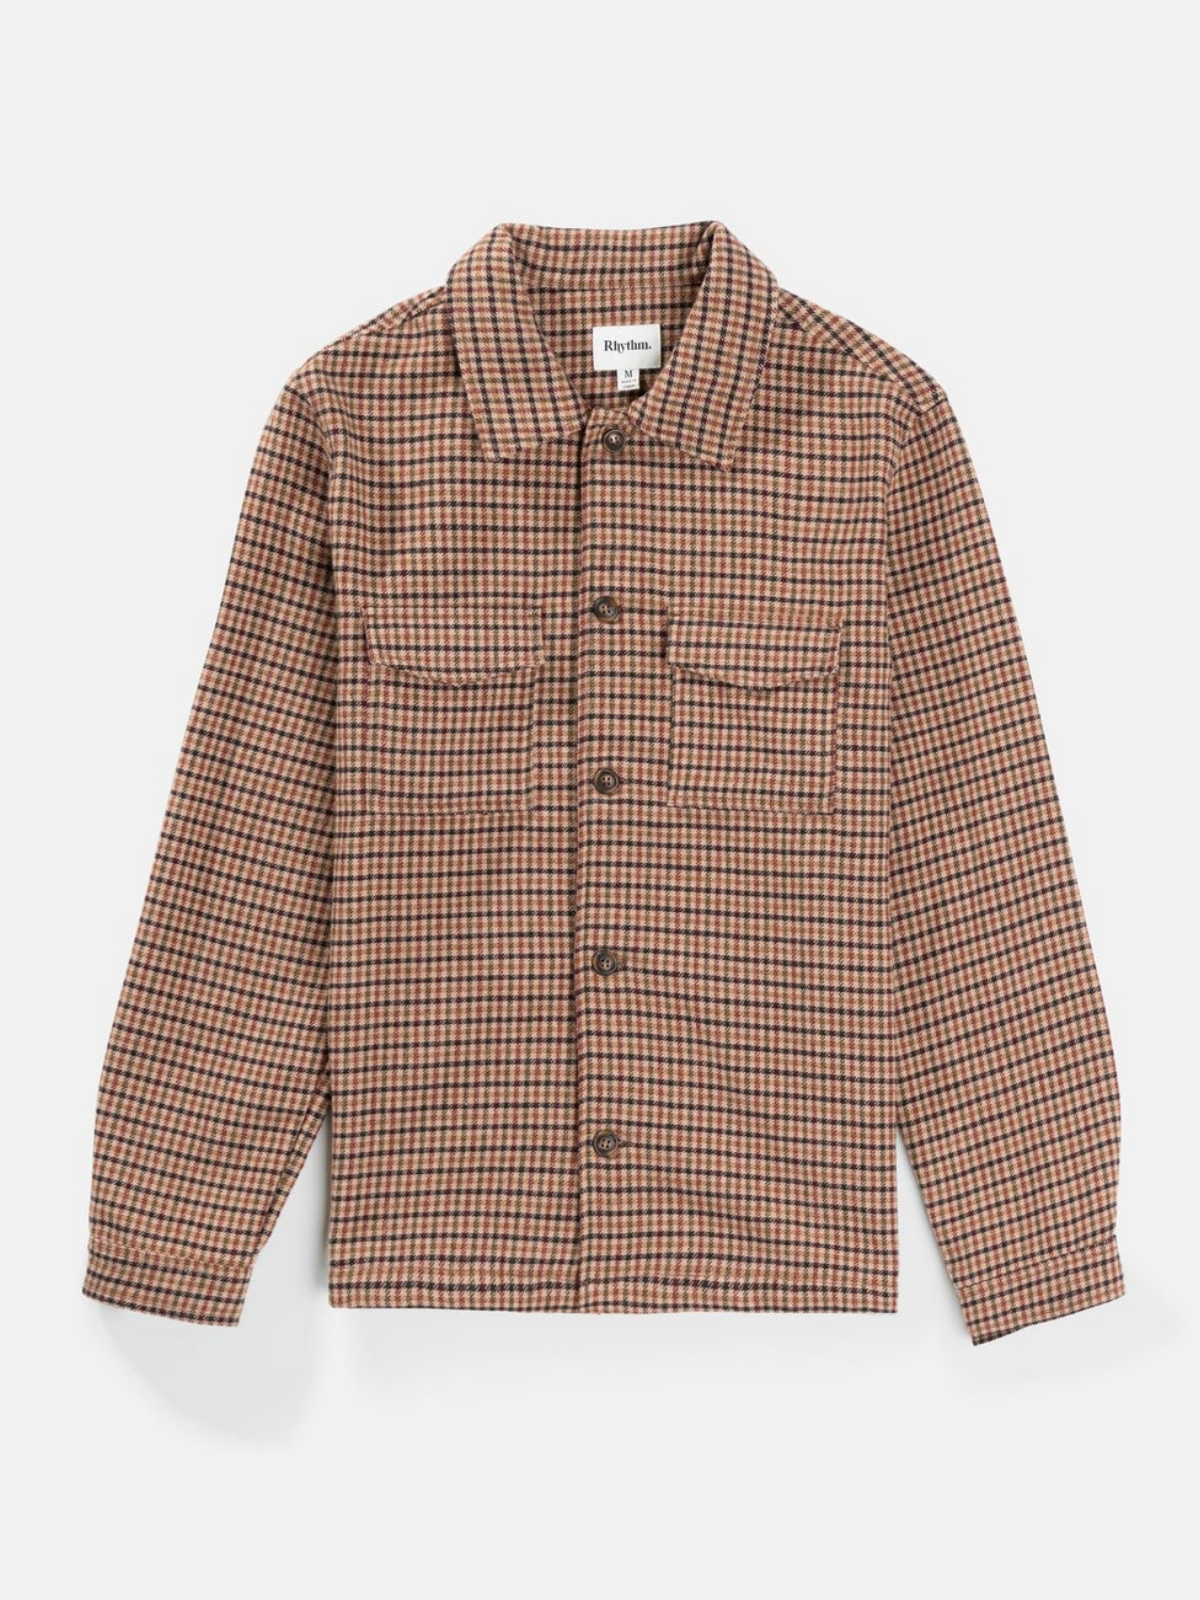 rhythm check overshirt wool blend polyester flannel dawn orange red tan brown black plaid pattern workwear shirt kempt athens ga georgia men's clothing store